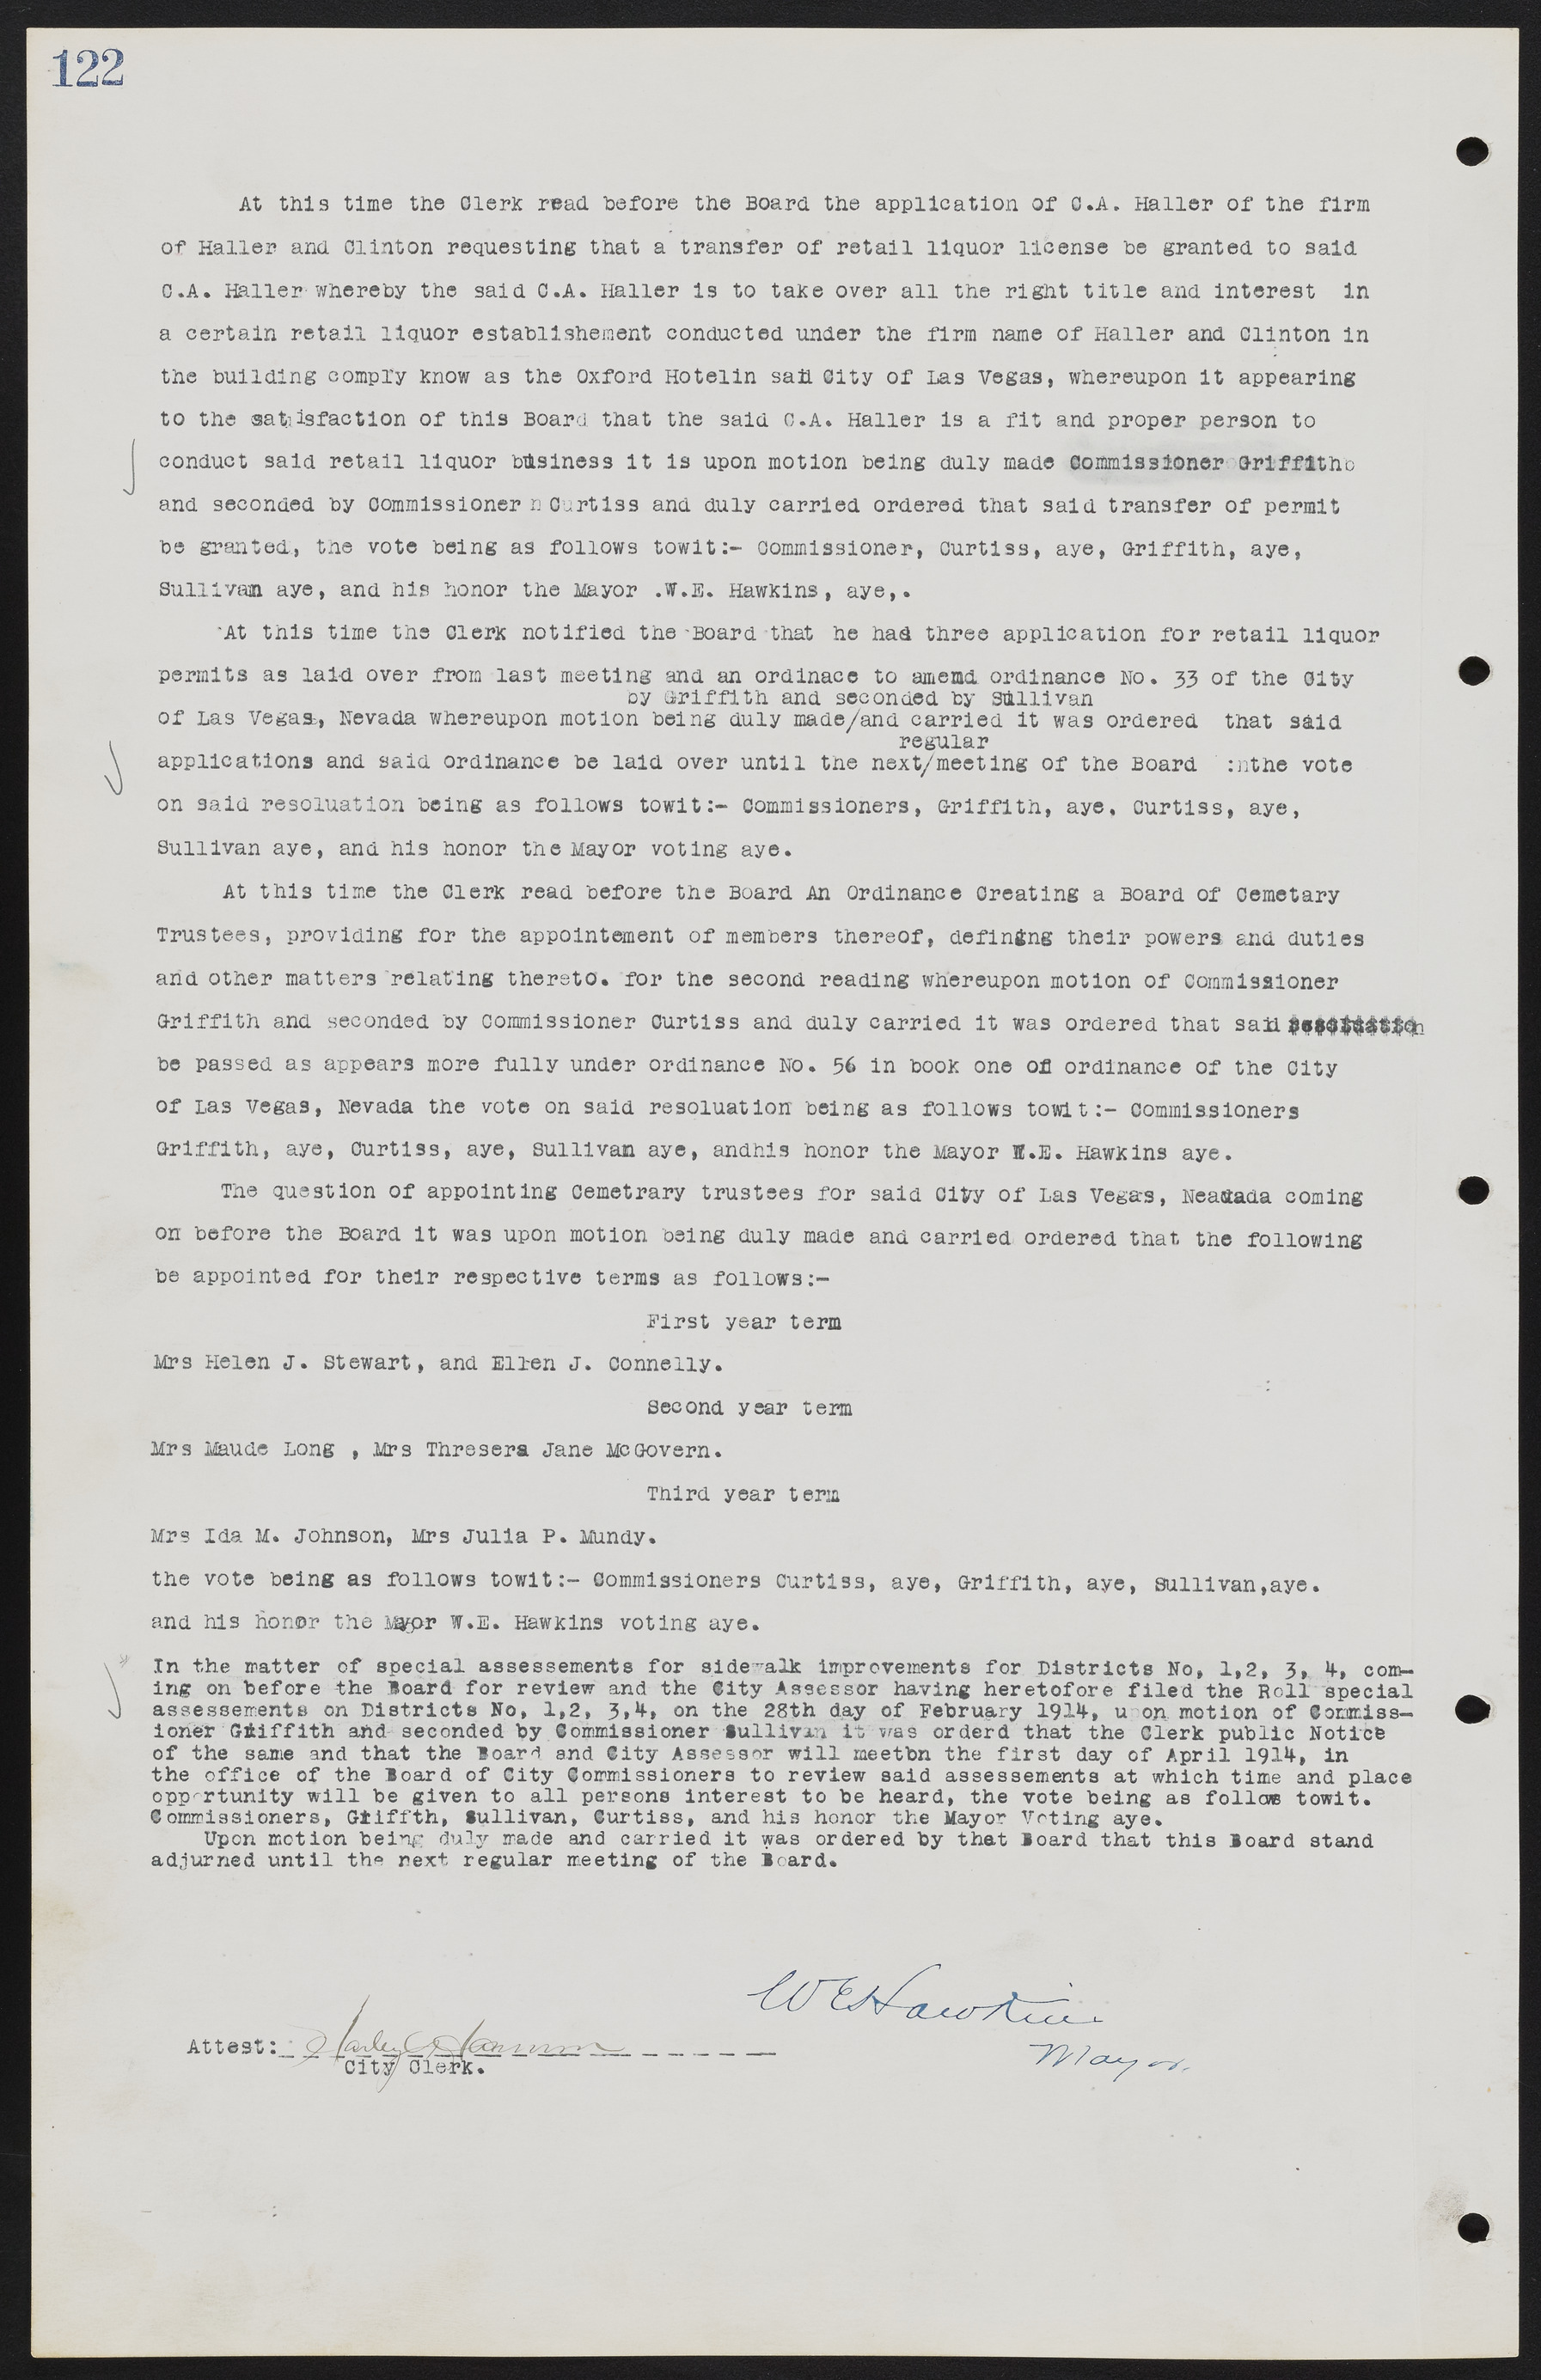 Las Vegas City Commission Minutes, June 22, 1911 to February 7, 1922, lvc000001-136